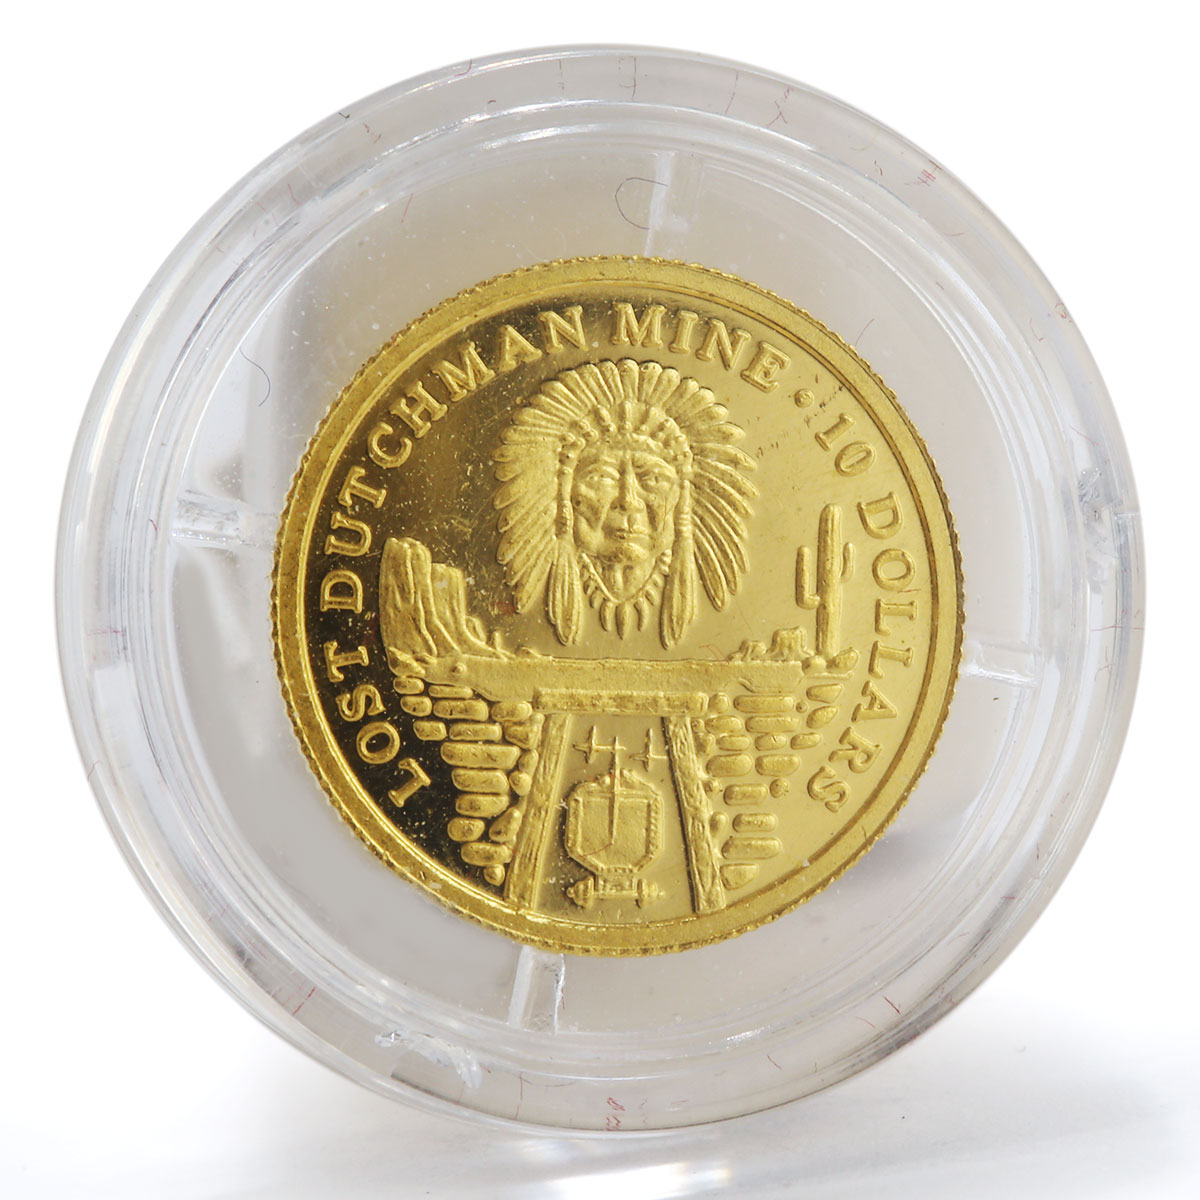 Cook Island 10 dollars Lost Dutchman Gold Mine Indian Desert gold coin 2006